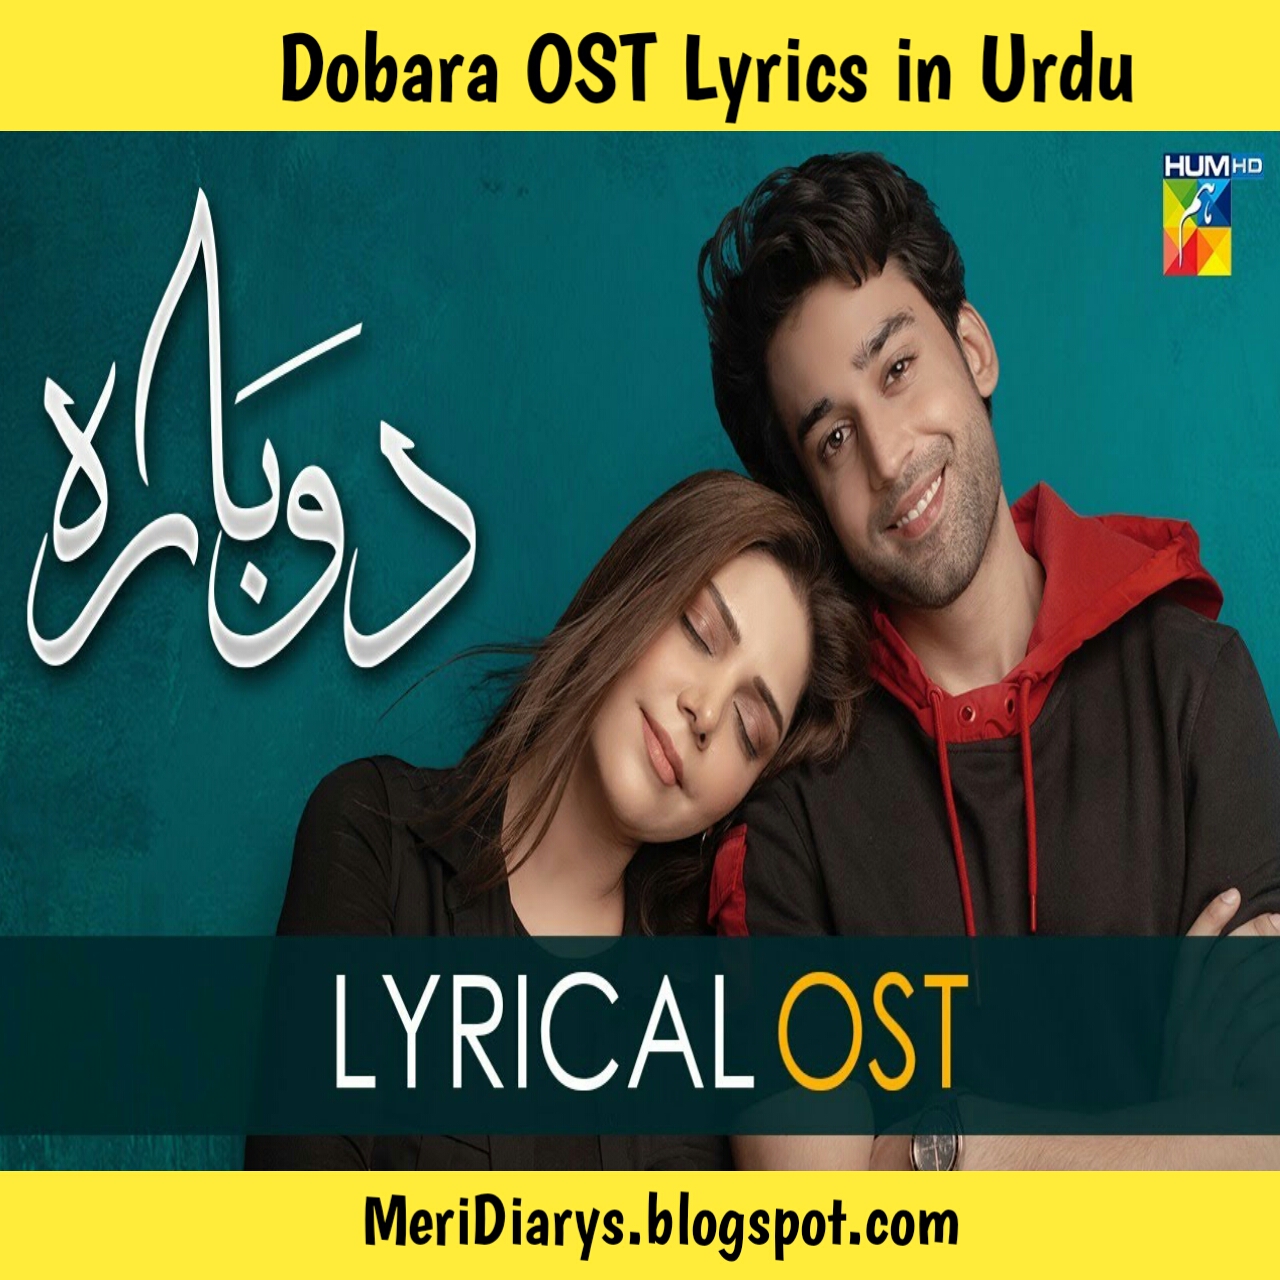 Dobara OST Lyrics in Urdu / Hindi